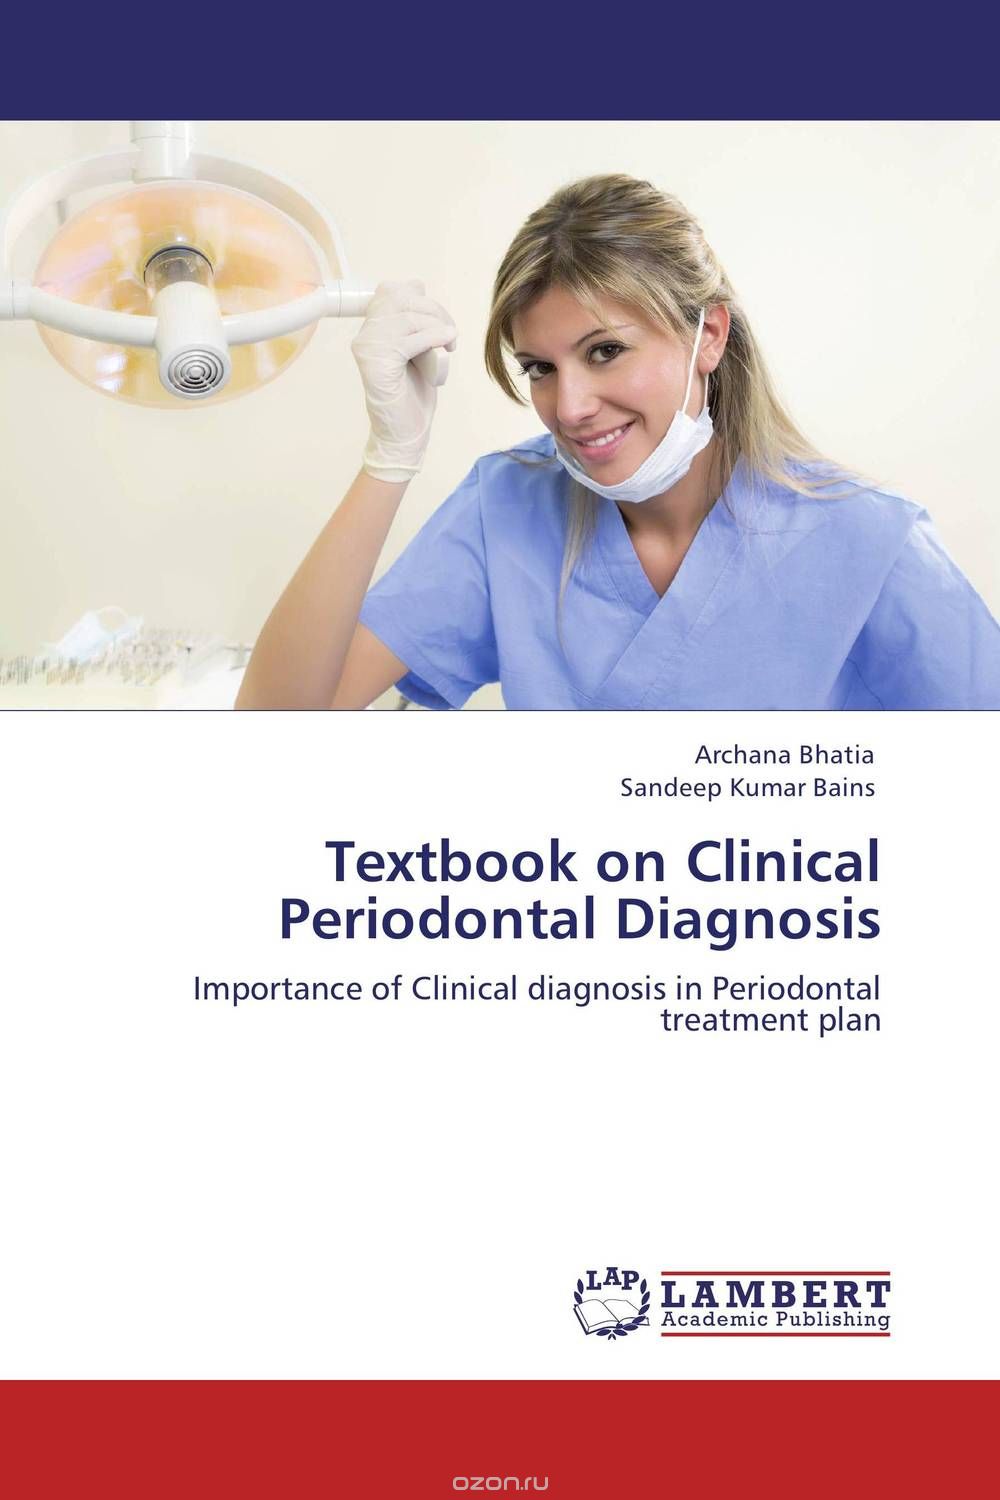 Скачать книгу "Textbook on Clinical Periodontal Diagnosis"